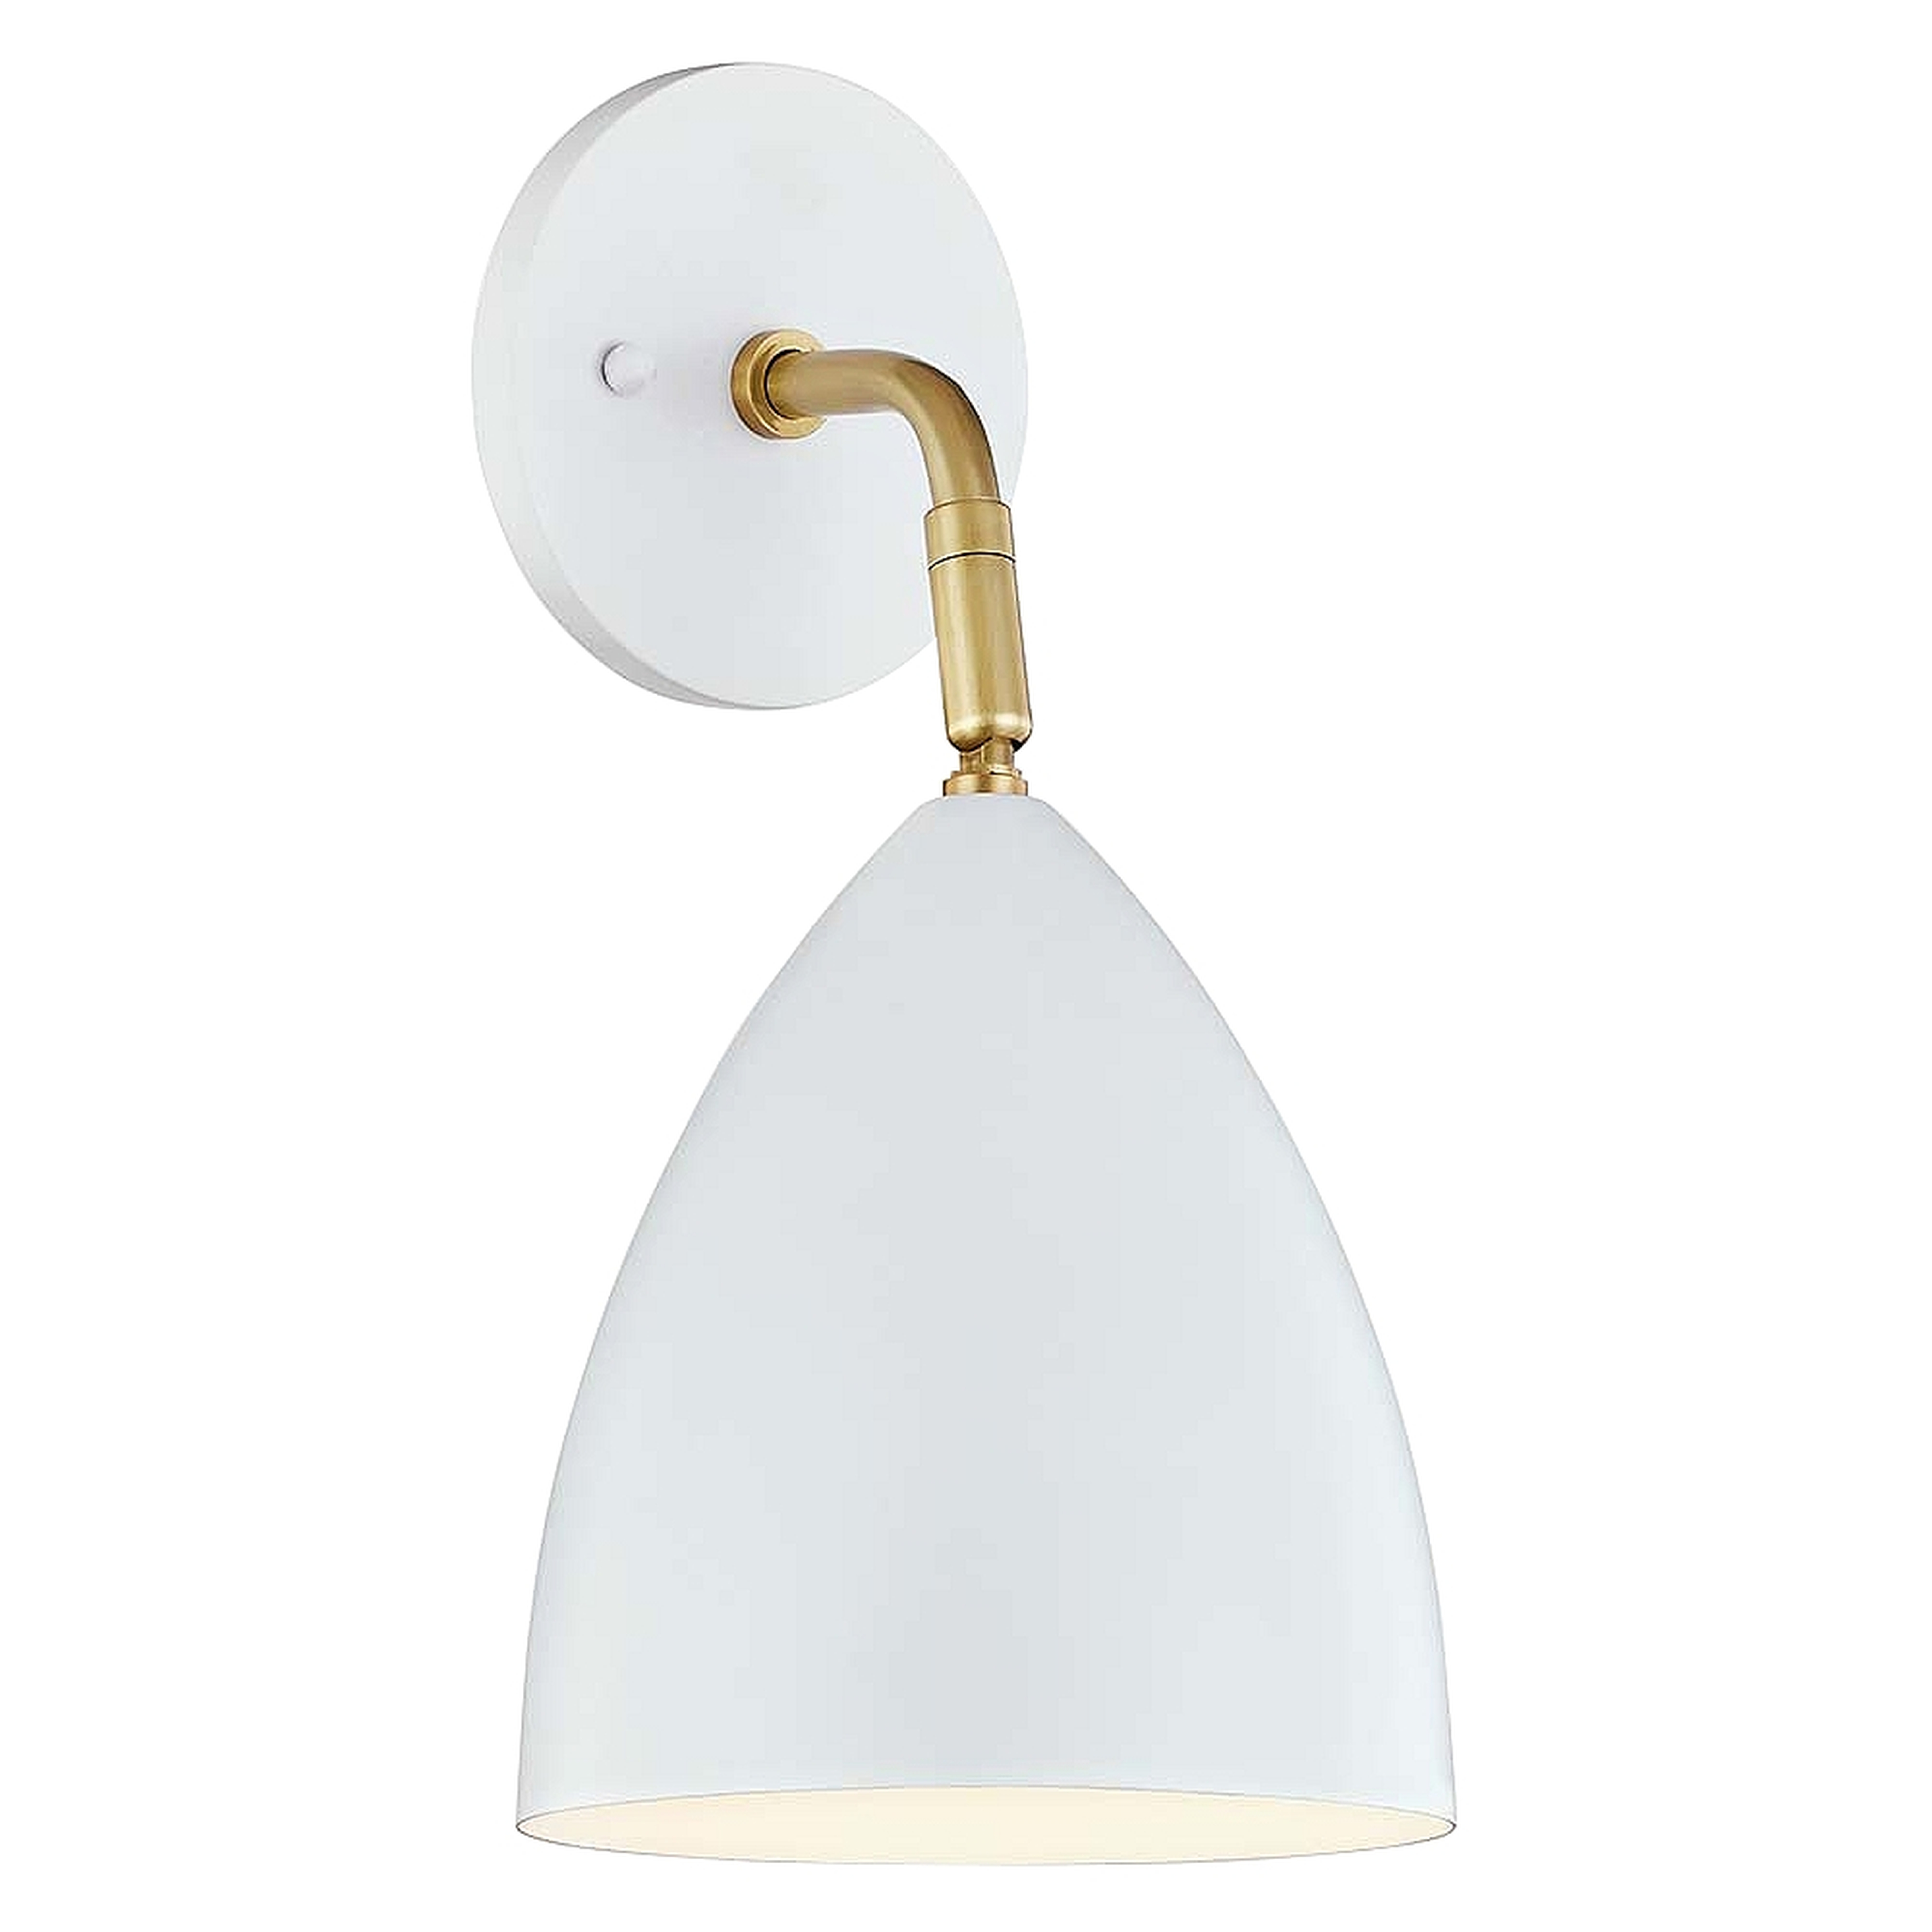 Mitzi Gia 12 1/2" High White Wall Sconce - Style # 72K94 - Lamps Plus